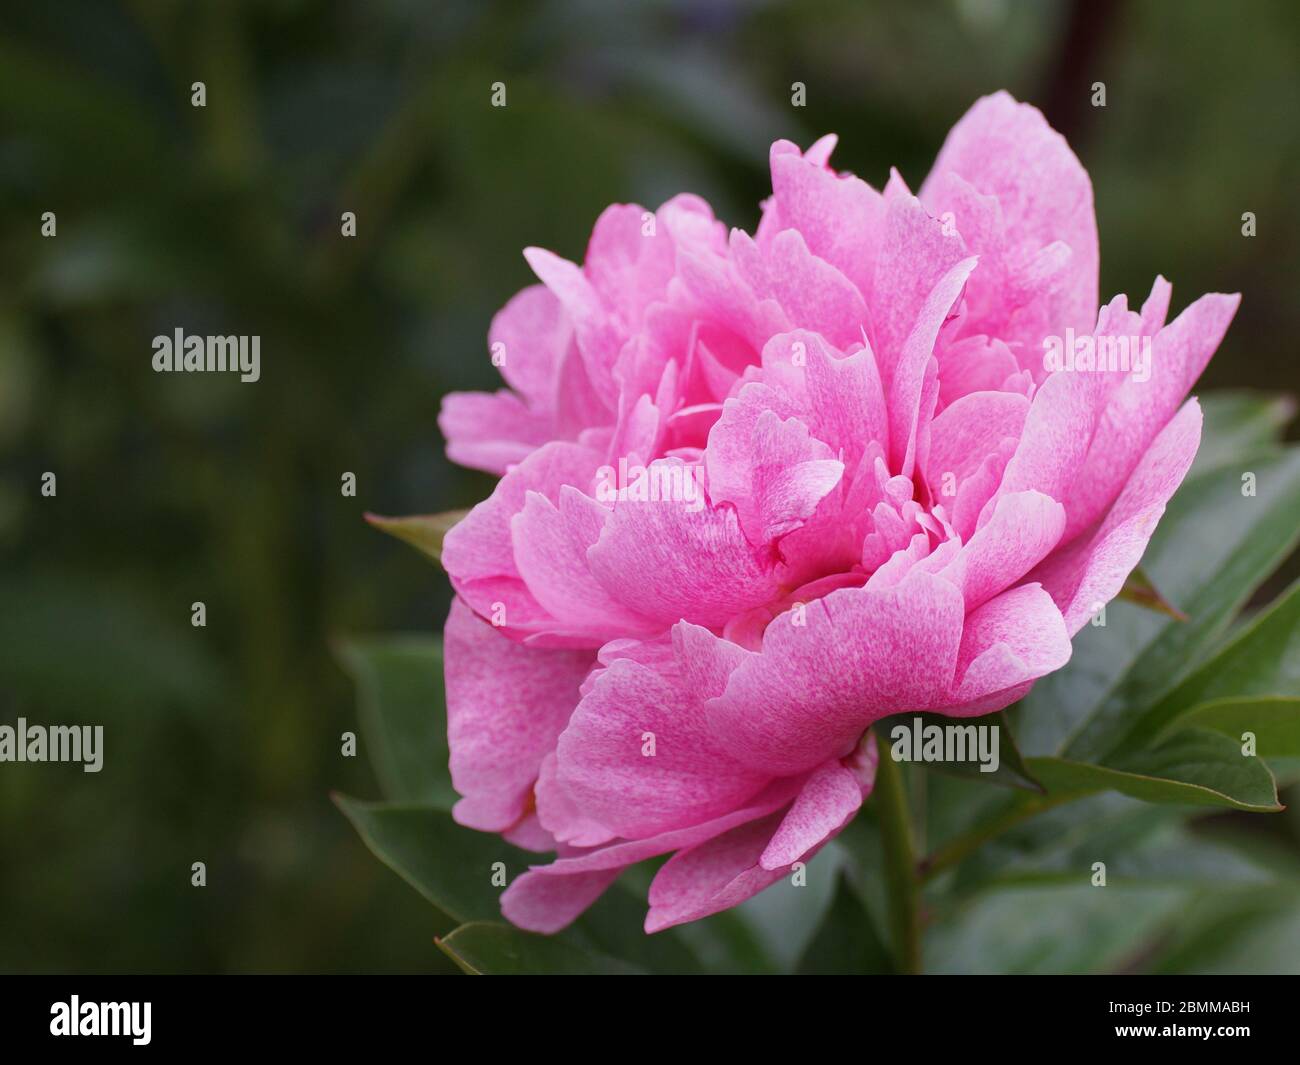 Pfingstrose Der Fawn. Doppelte rosa Pfingstrose Blume. Im Garten blüht ein wunderschöner rosa Pfingstrose. Stockfoto